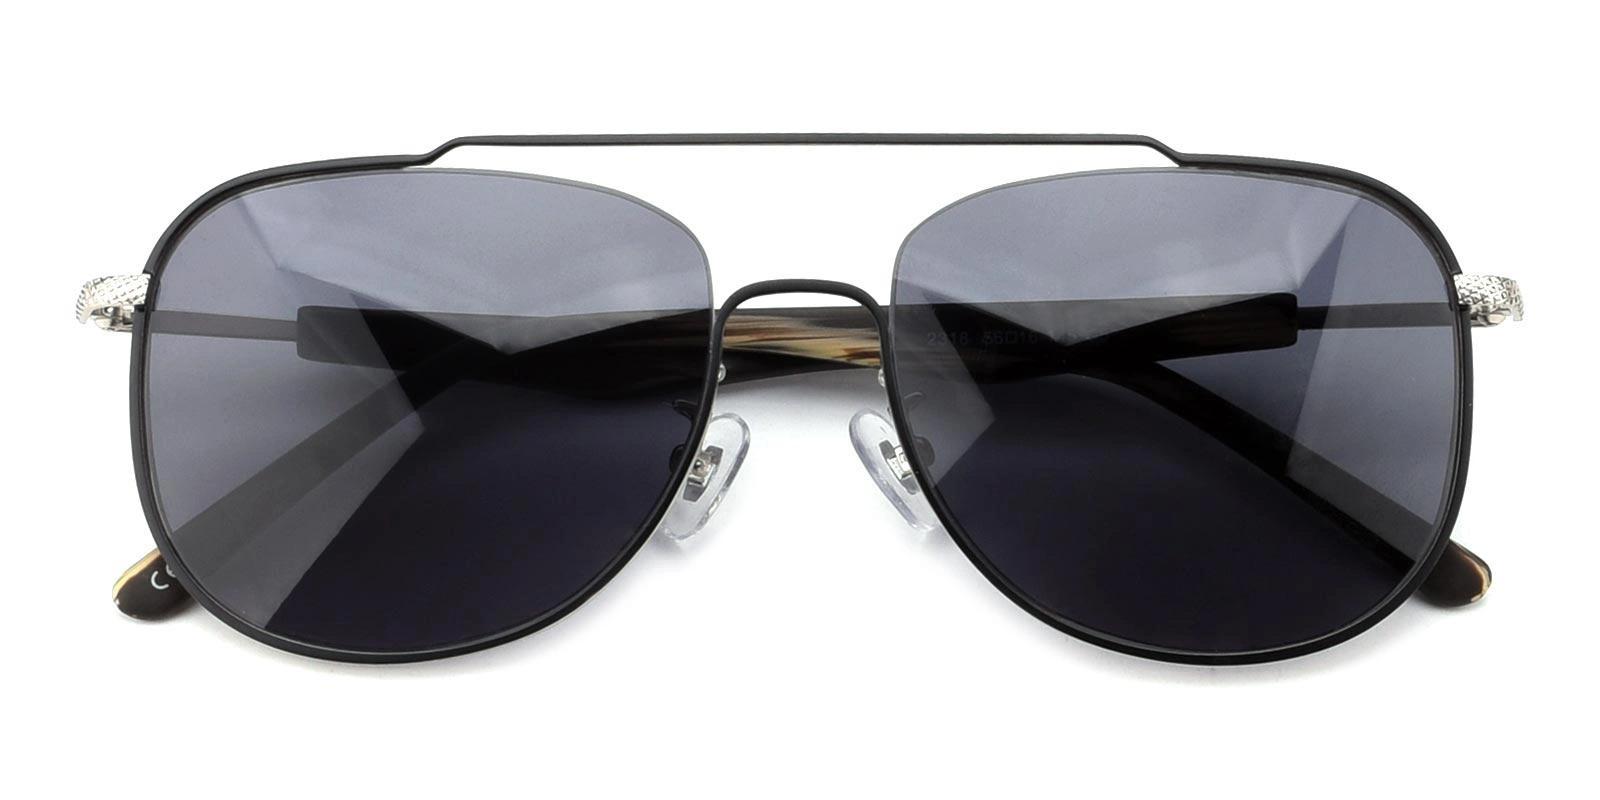 Hemile Silver Metal Sunglasses , NosePads Frames from ABBE Glasses